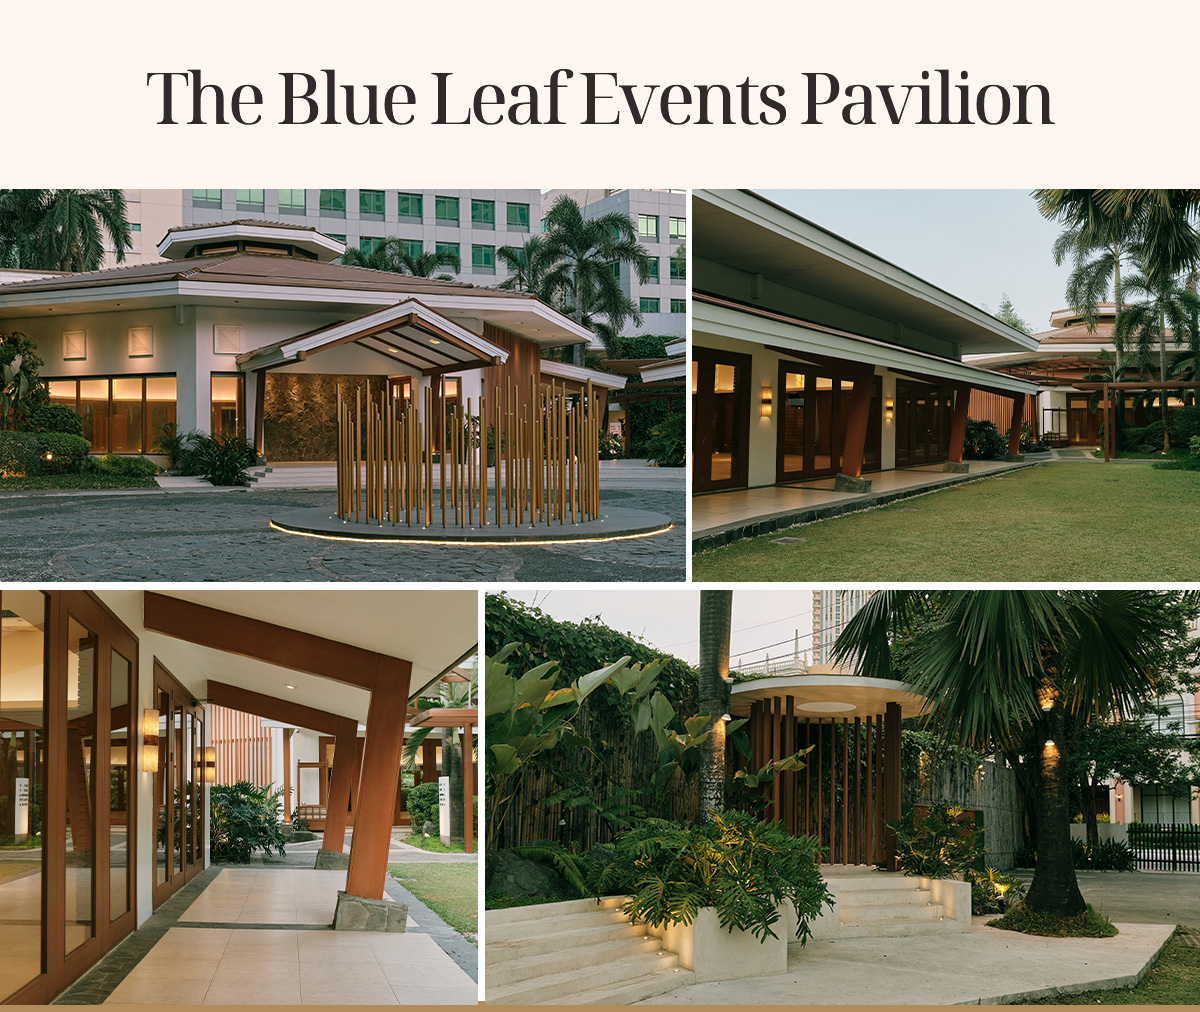 The Blue Leaf Events Pavilion